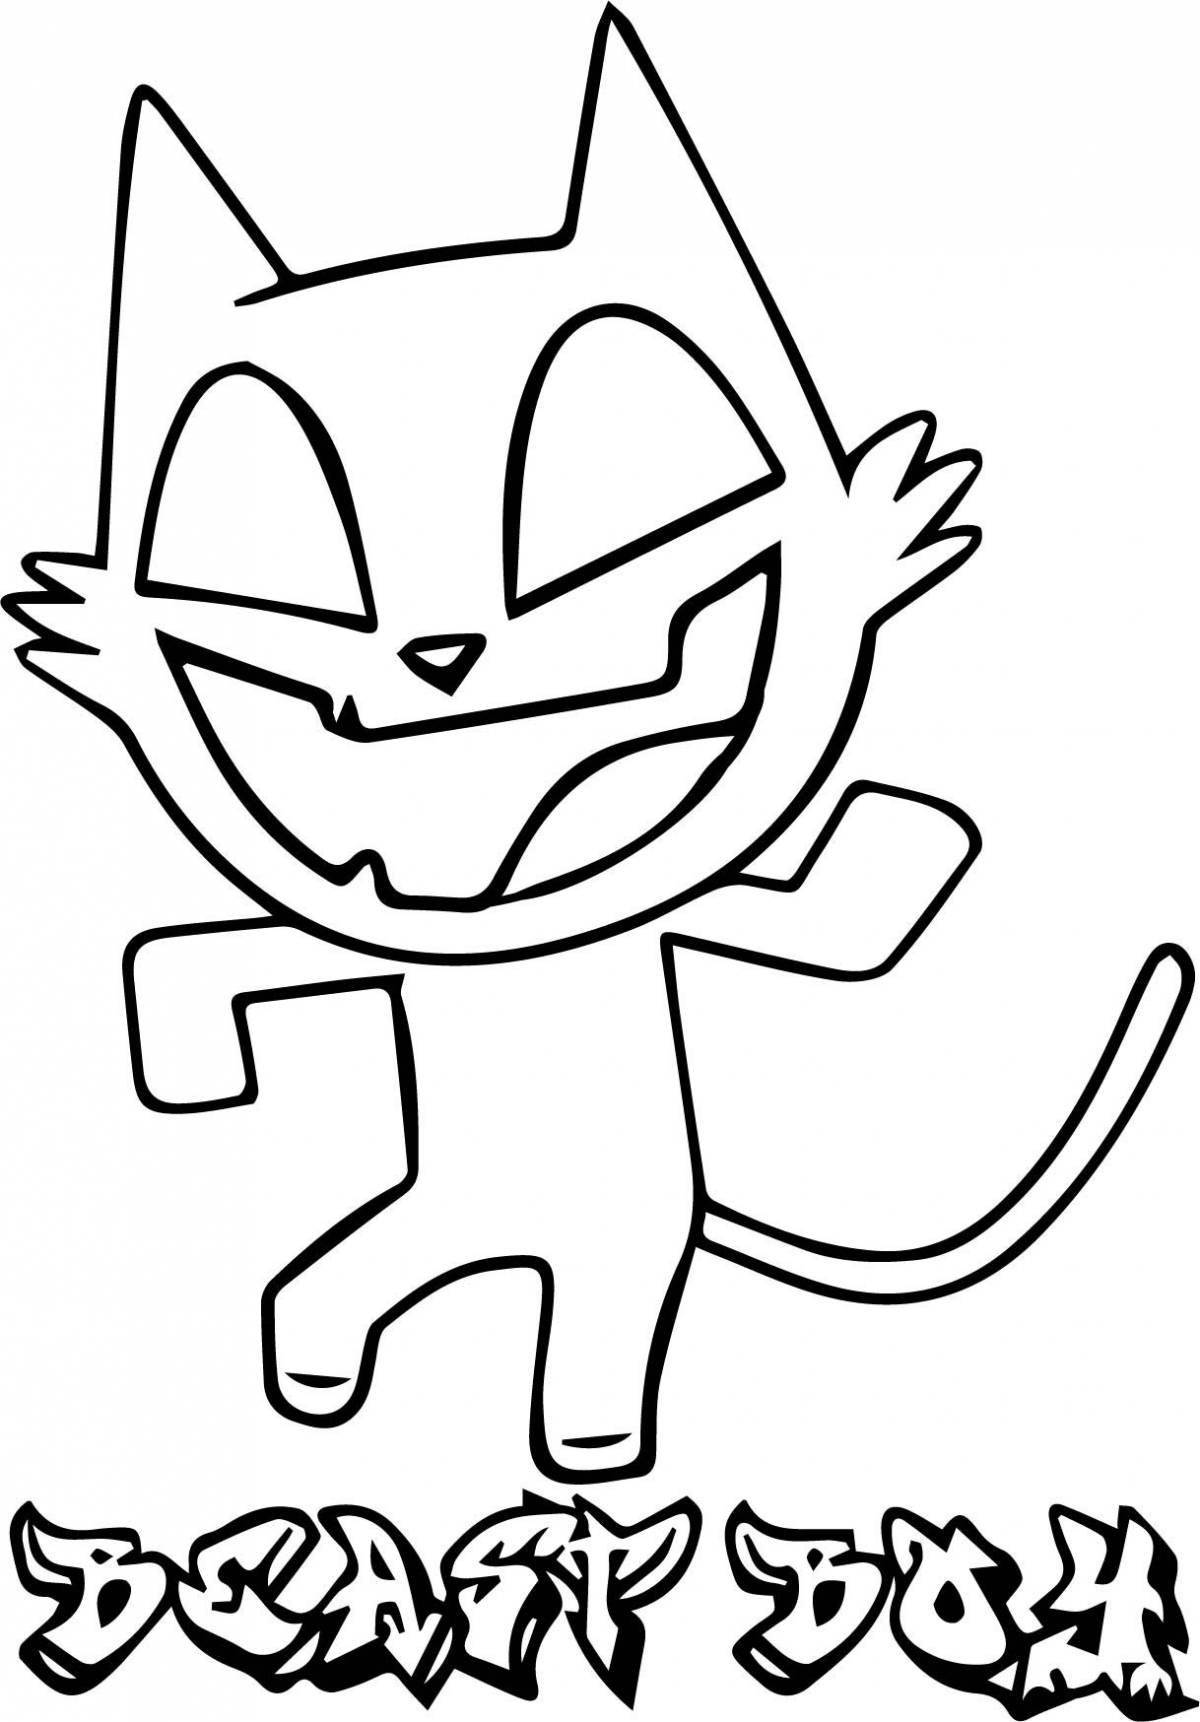 Playful cartoon cat coloring page